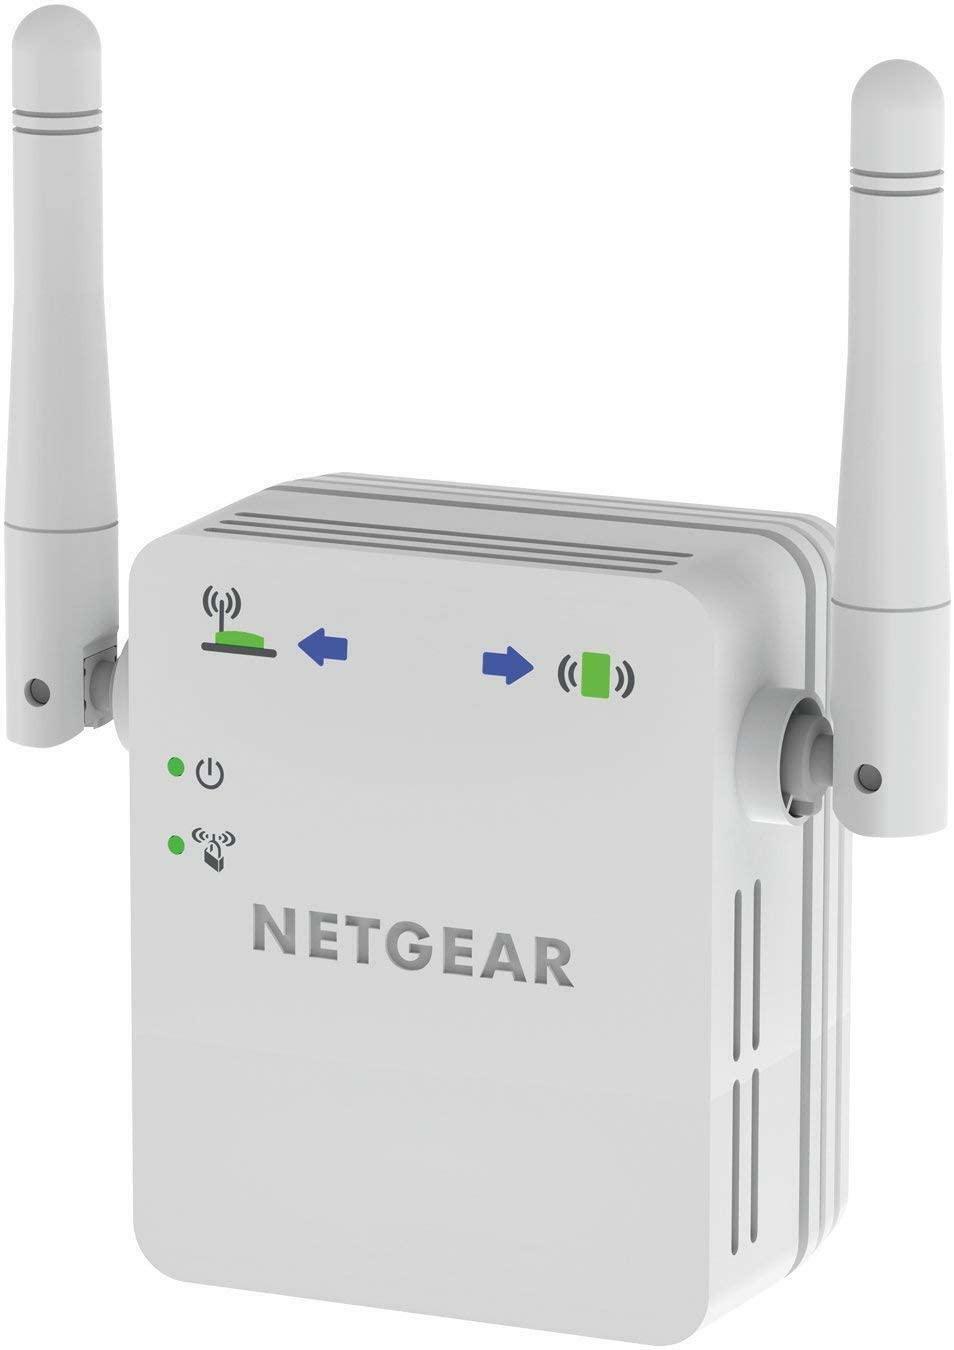 Netgear extender wi-fi range 8802.11n) 2,4ghz